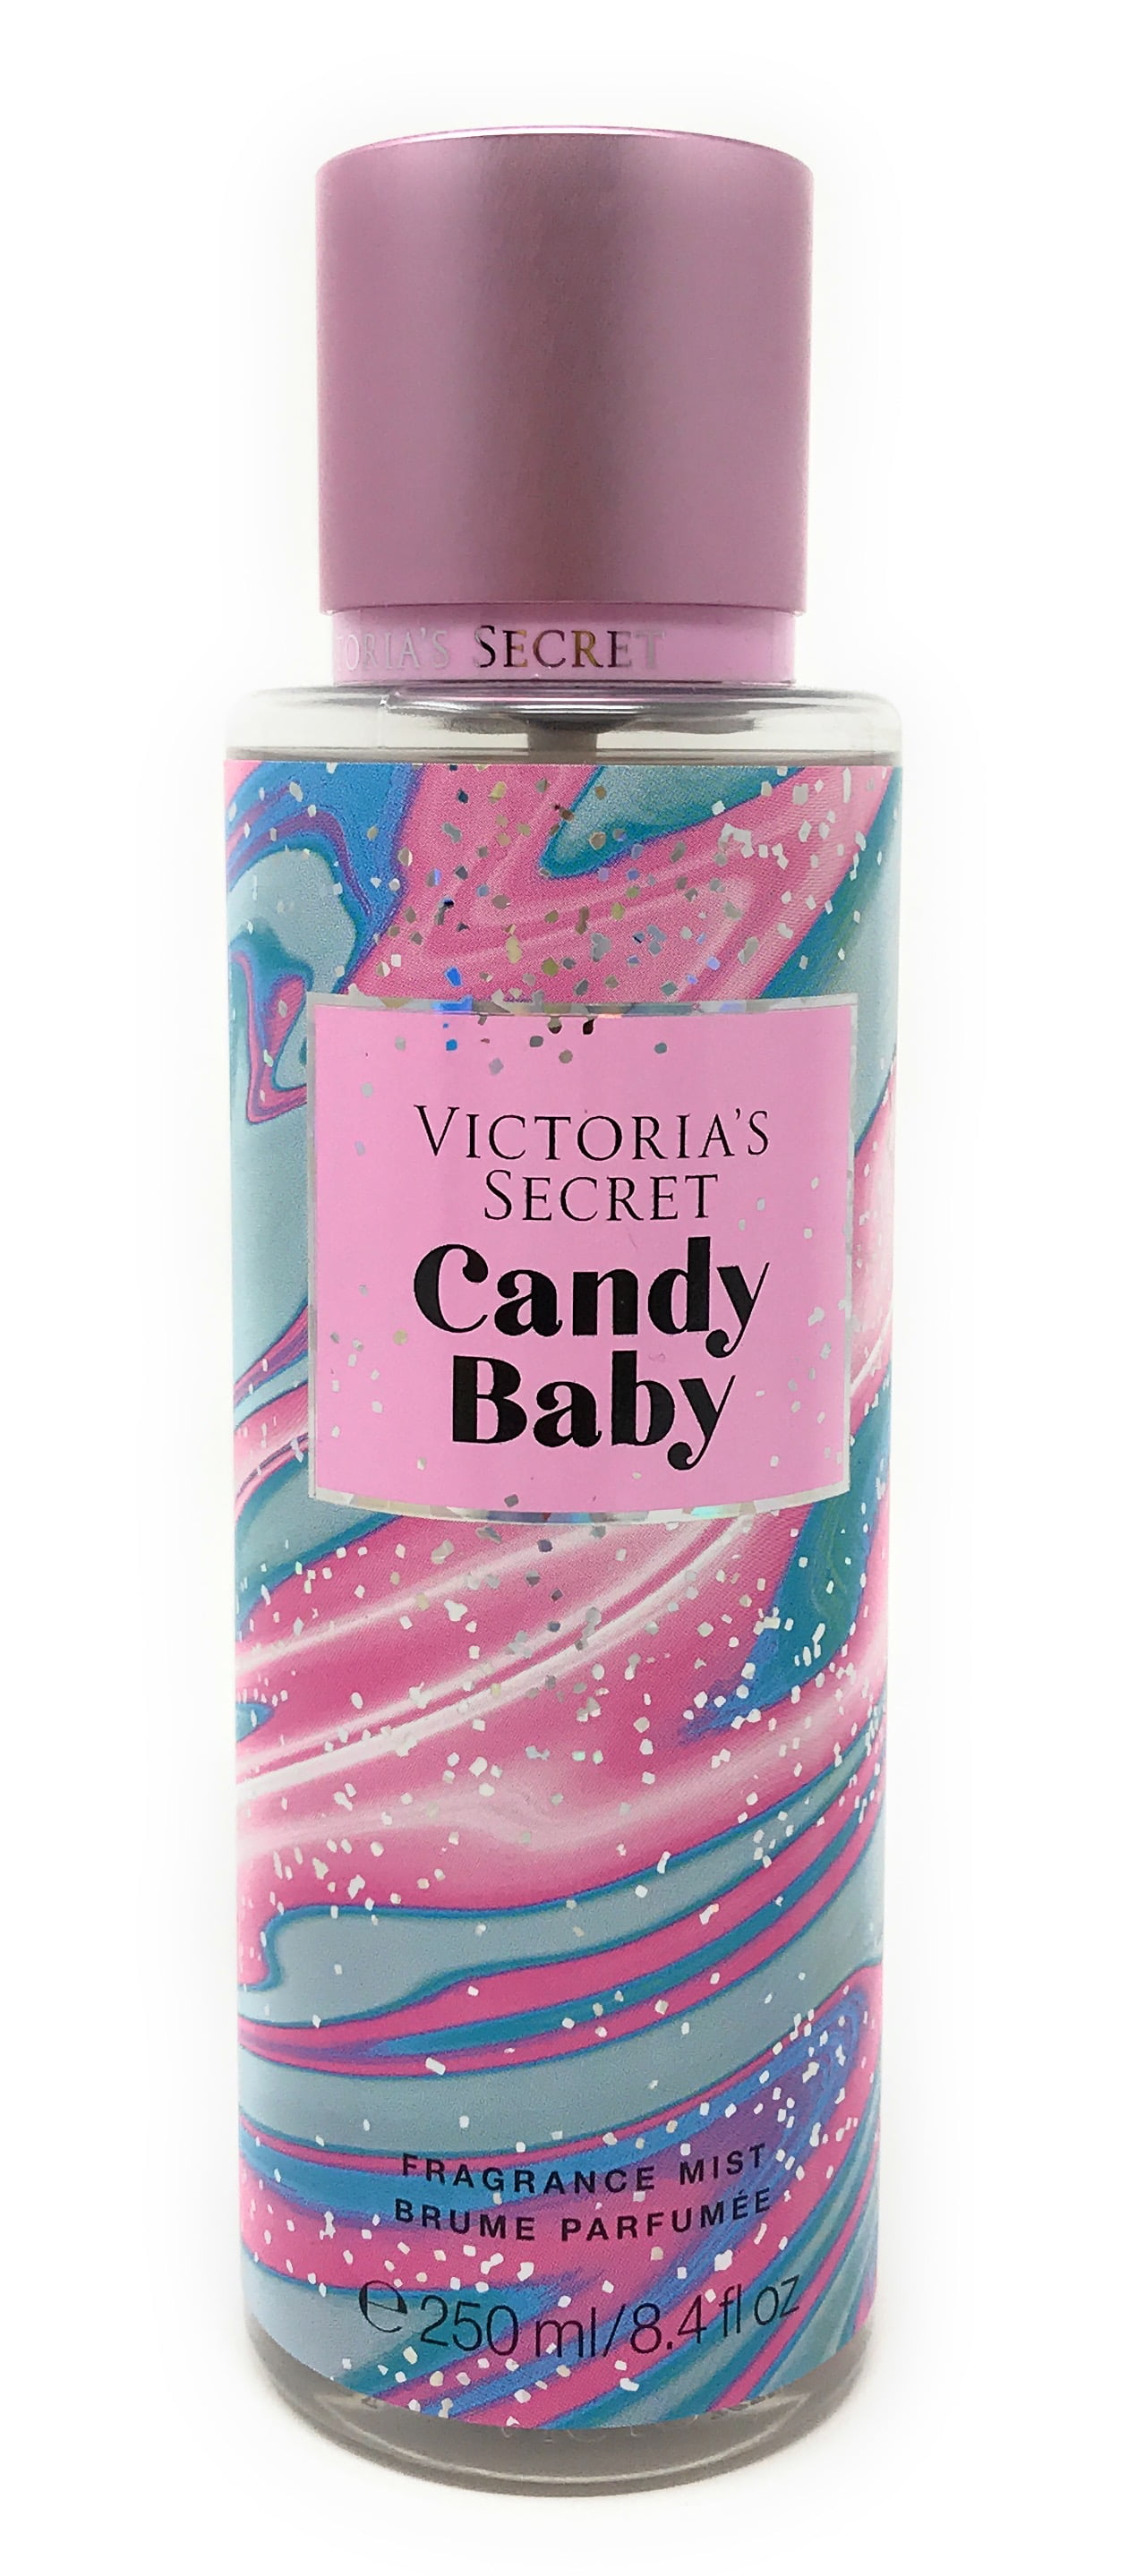 Victoria's Secret Candy Baby Fragrance Mist 8.4 oz / 250 ml - Walmart.com